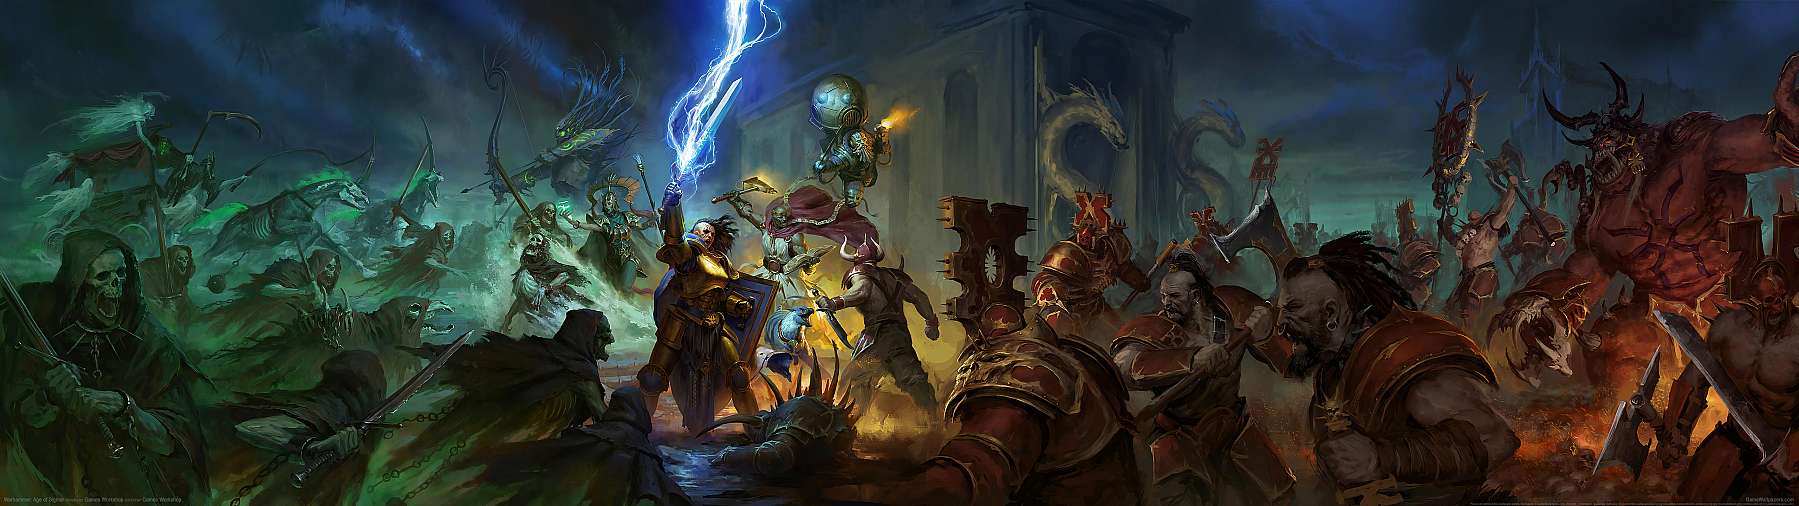 Warhammer: Age of Sigmar fond d'écran